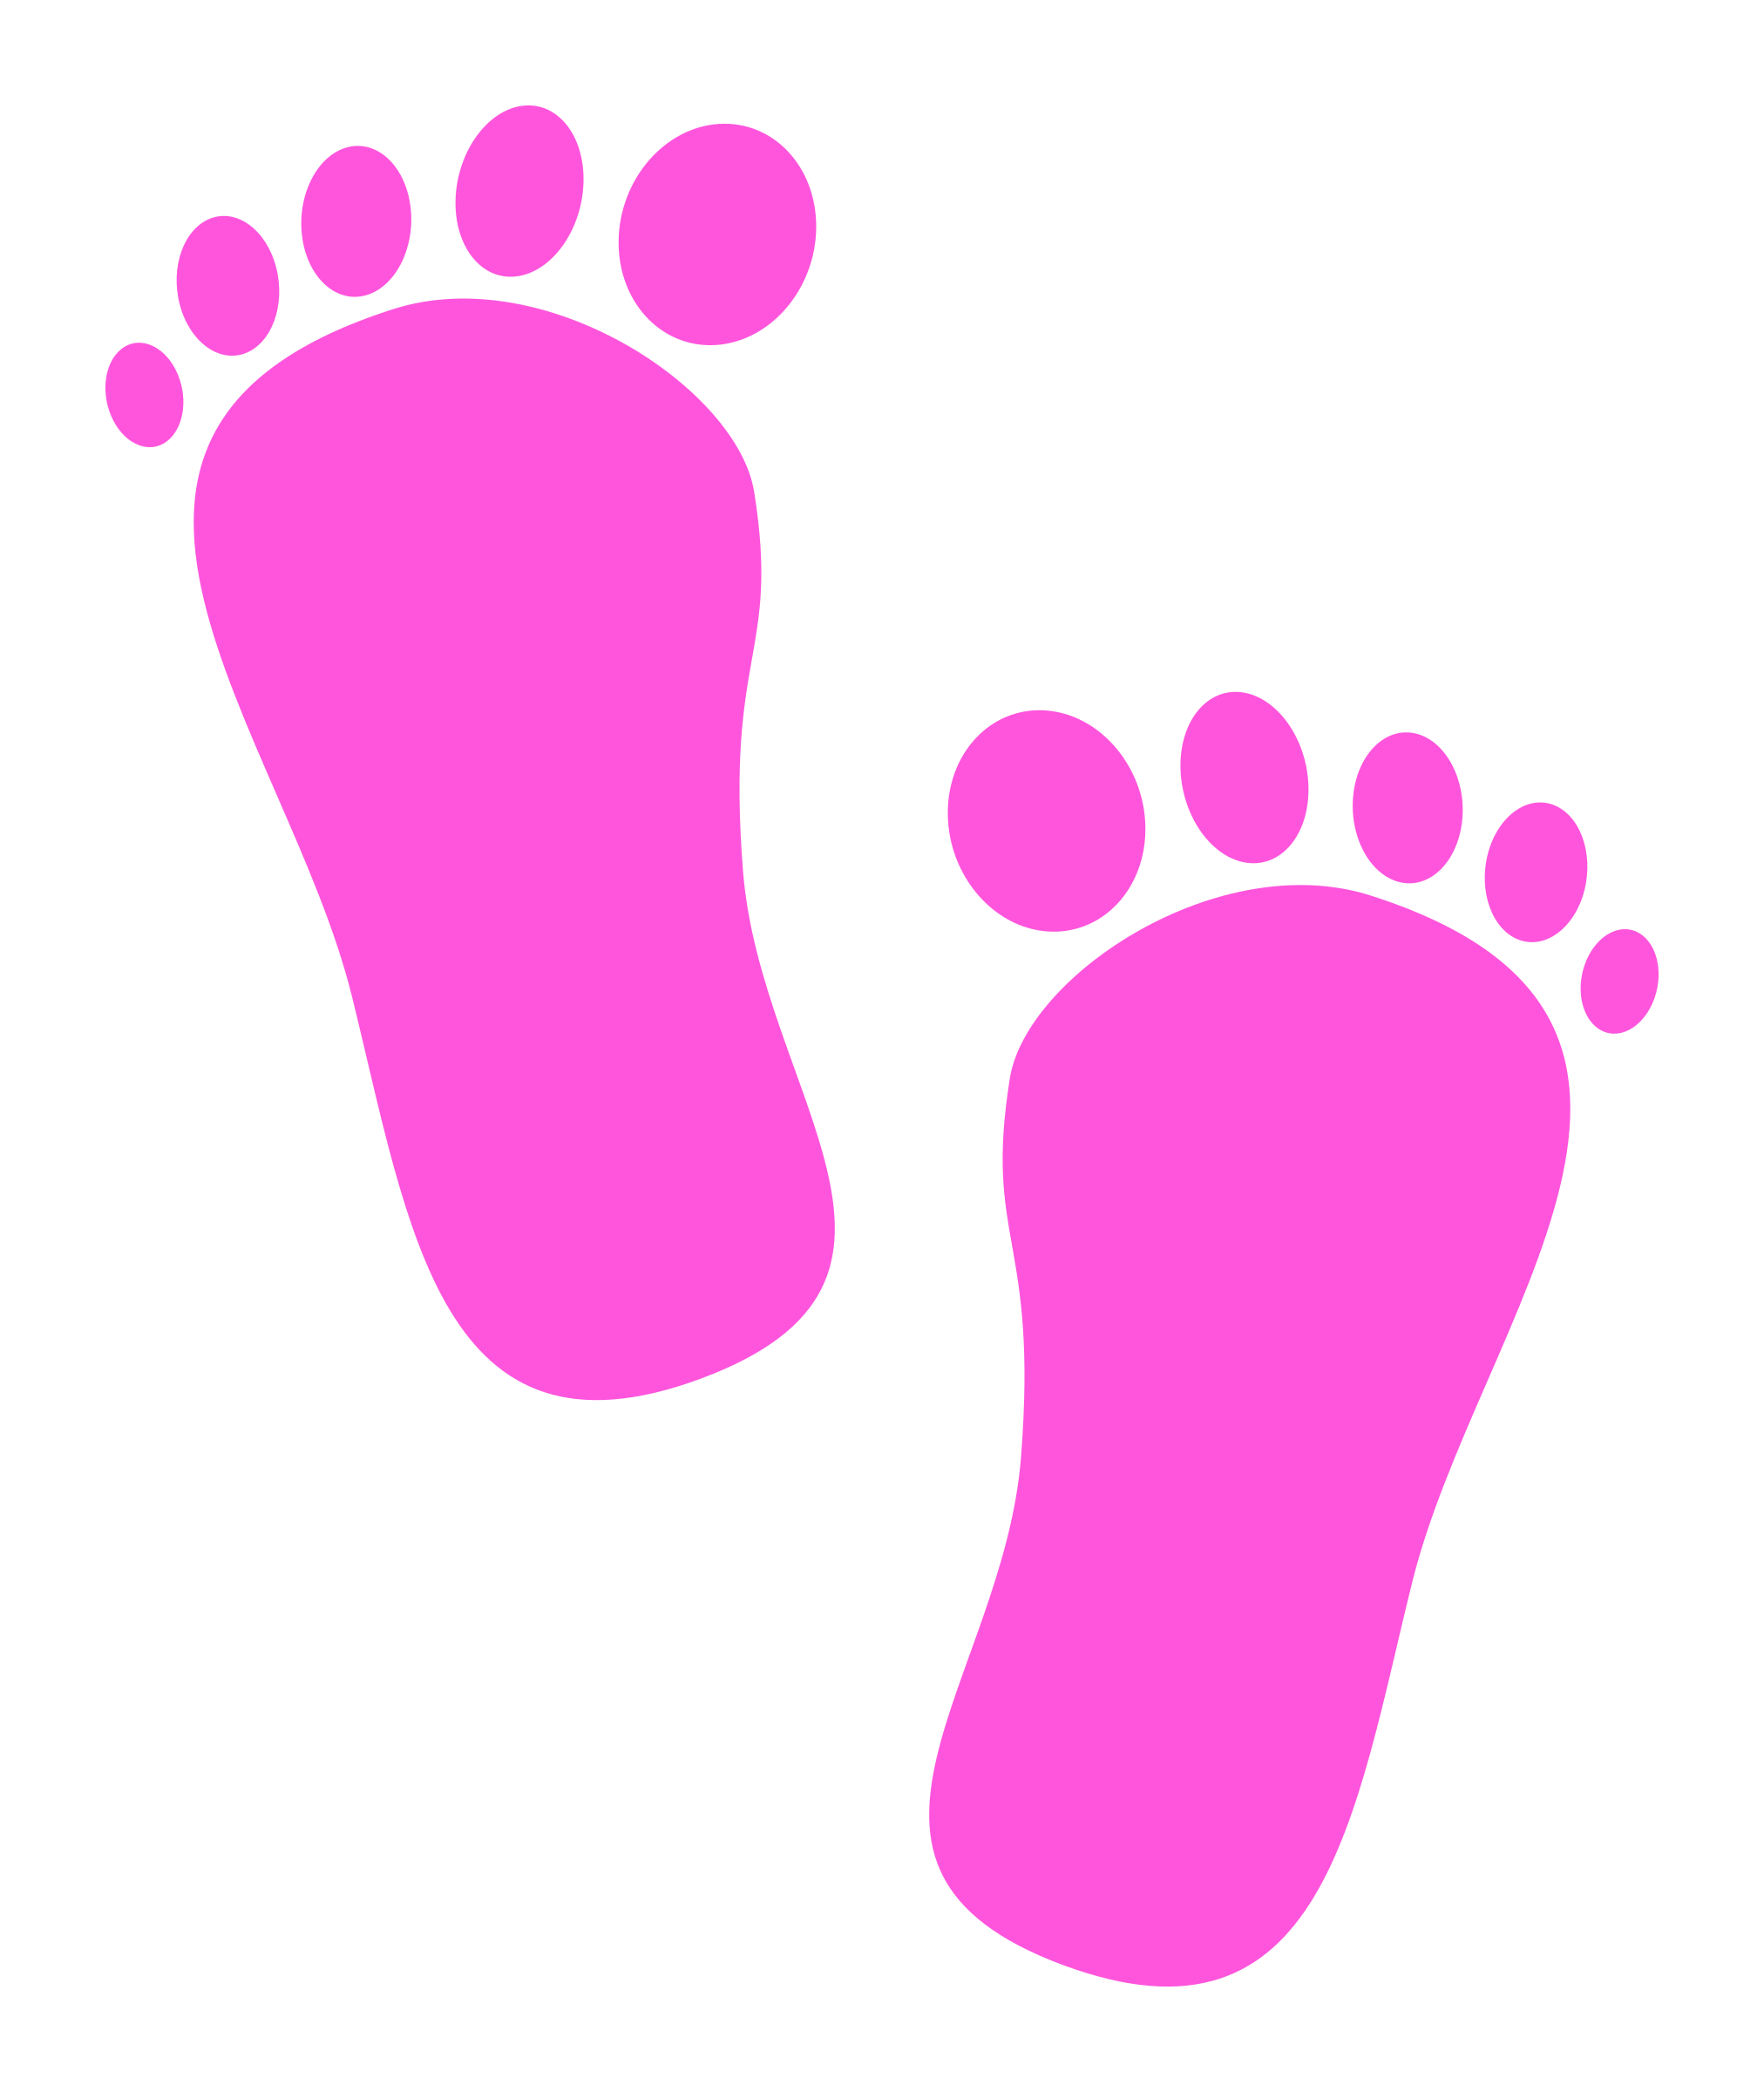 Footprint clipart travel. Baby footprints big image